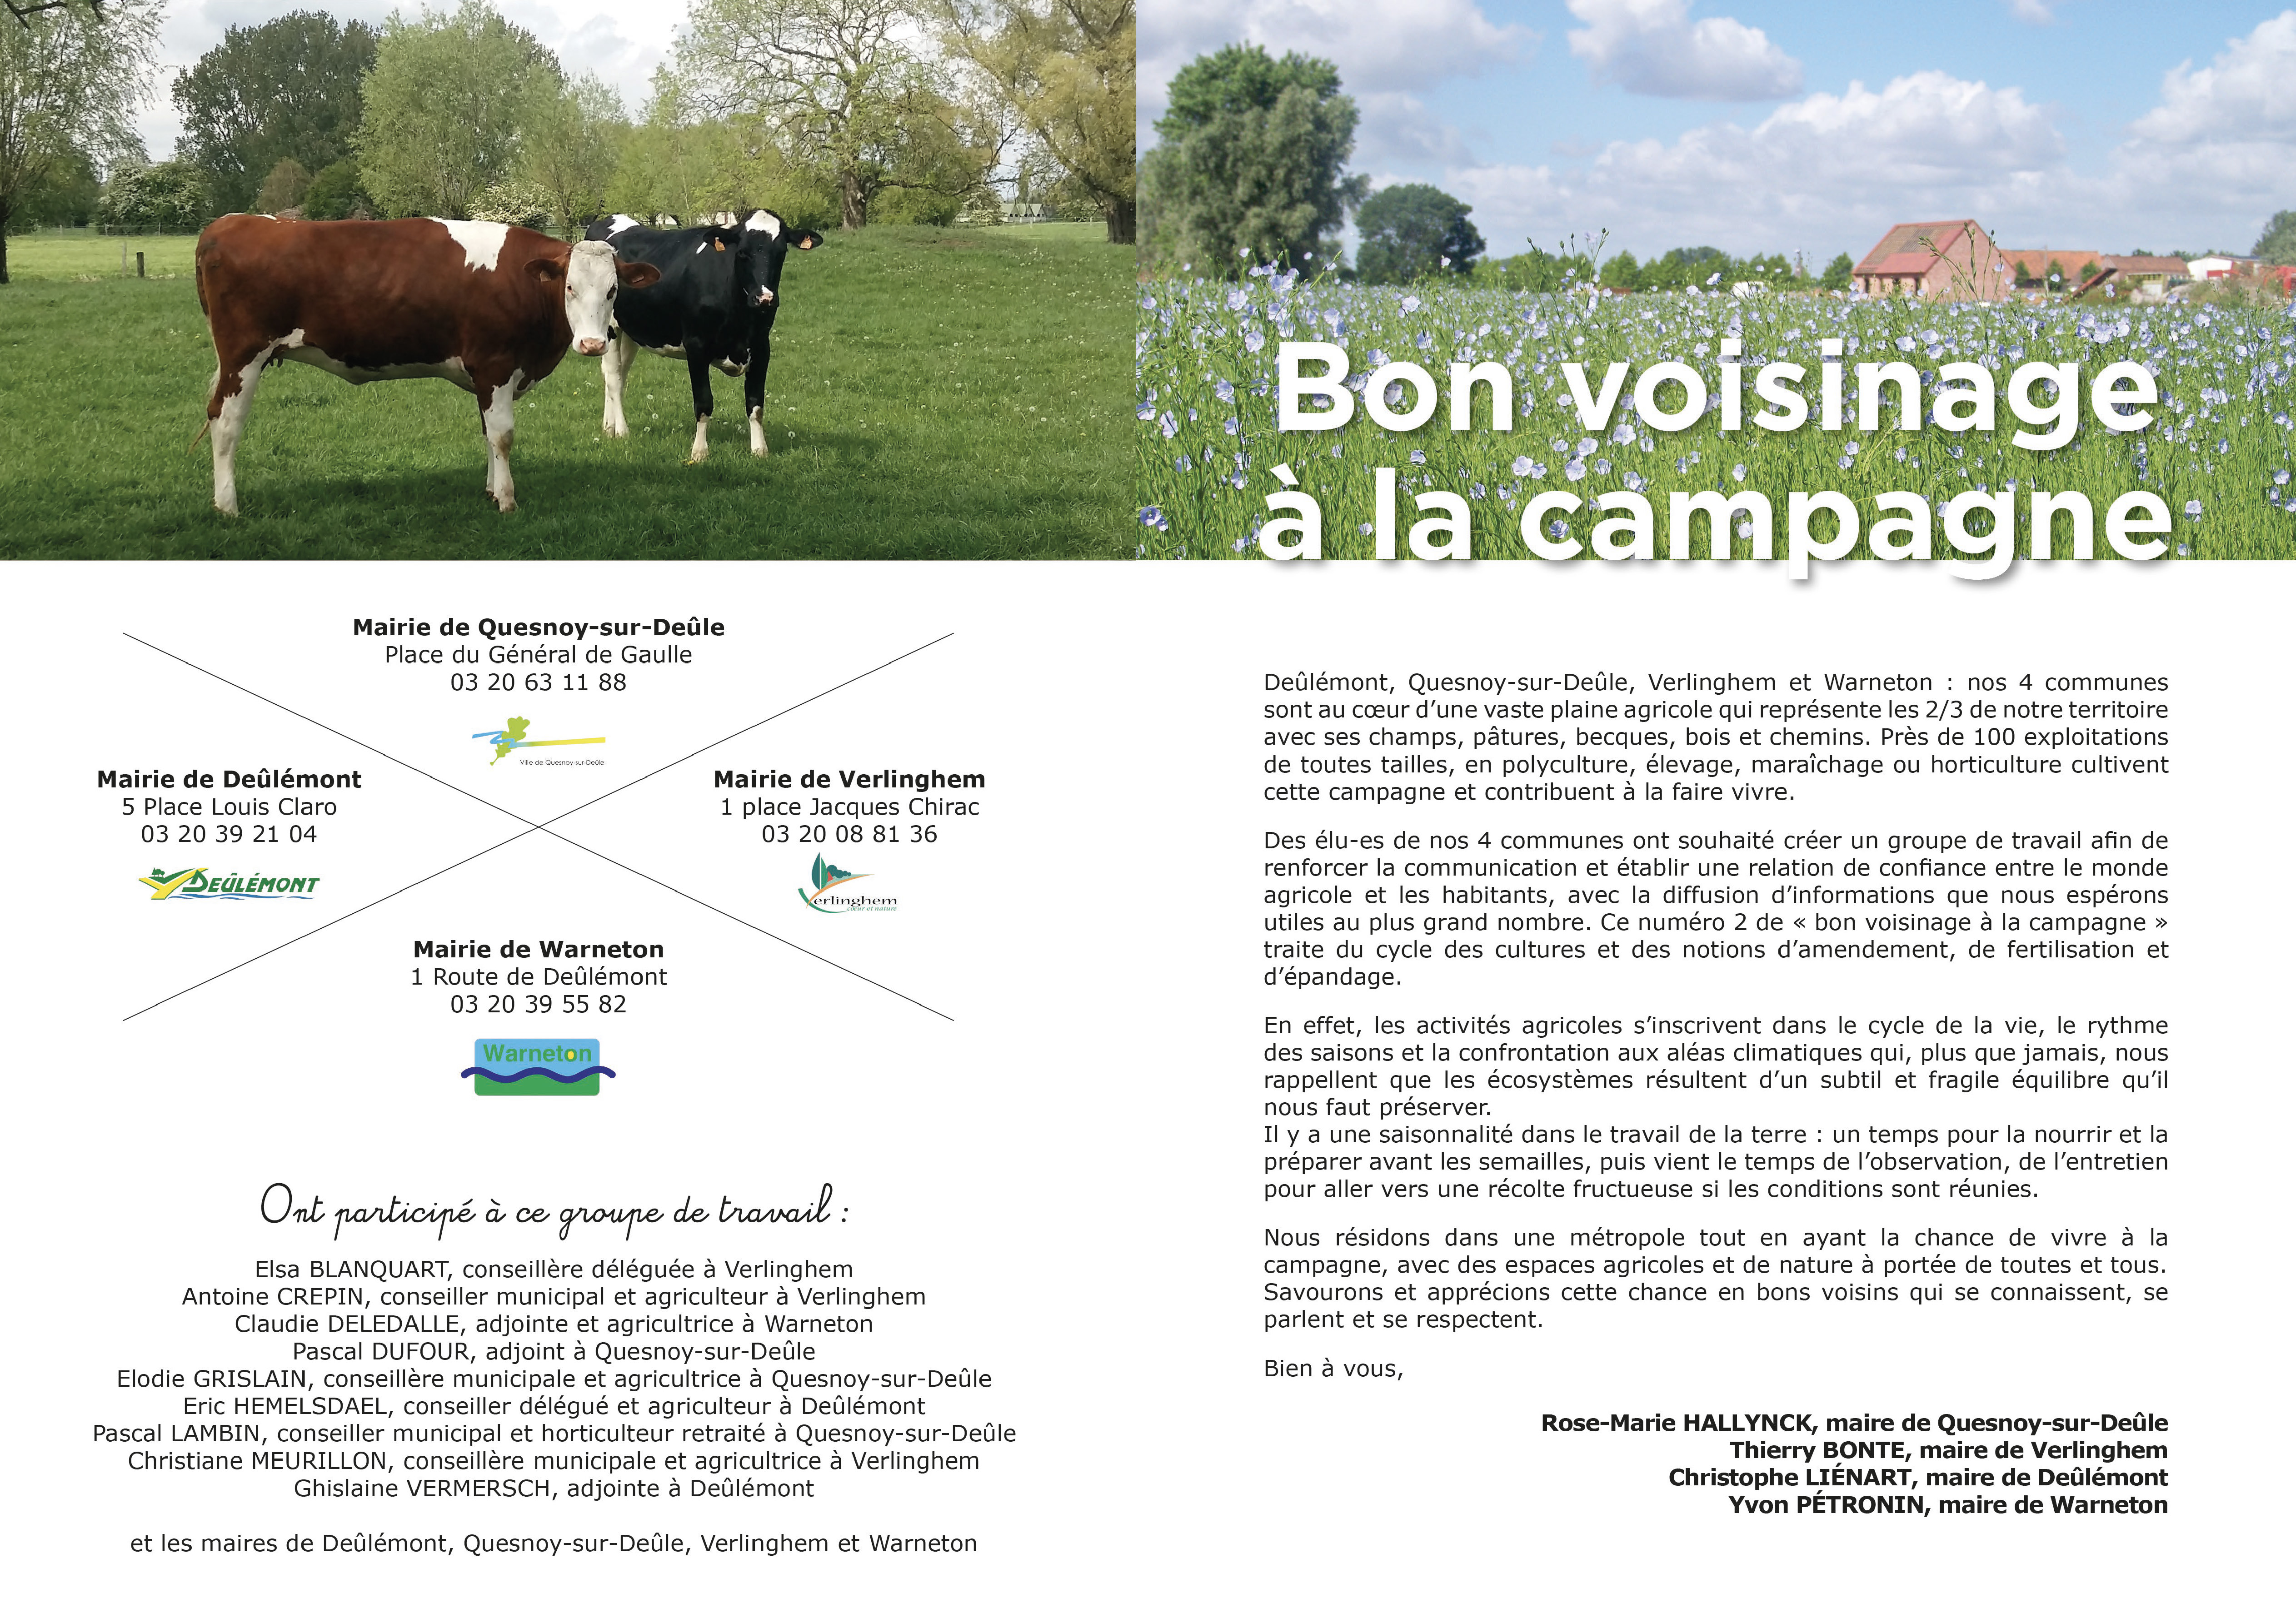 Brochure _bon voisinage à la campagne_ - V2 _imposition__Page_1.jpg